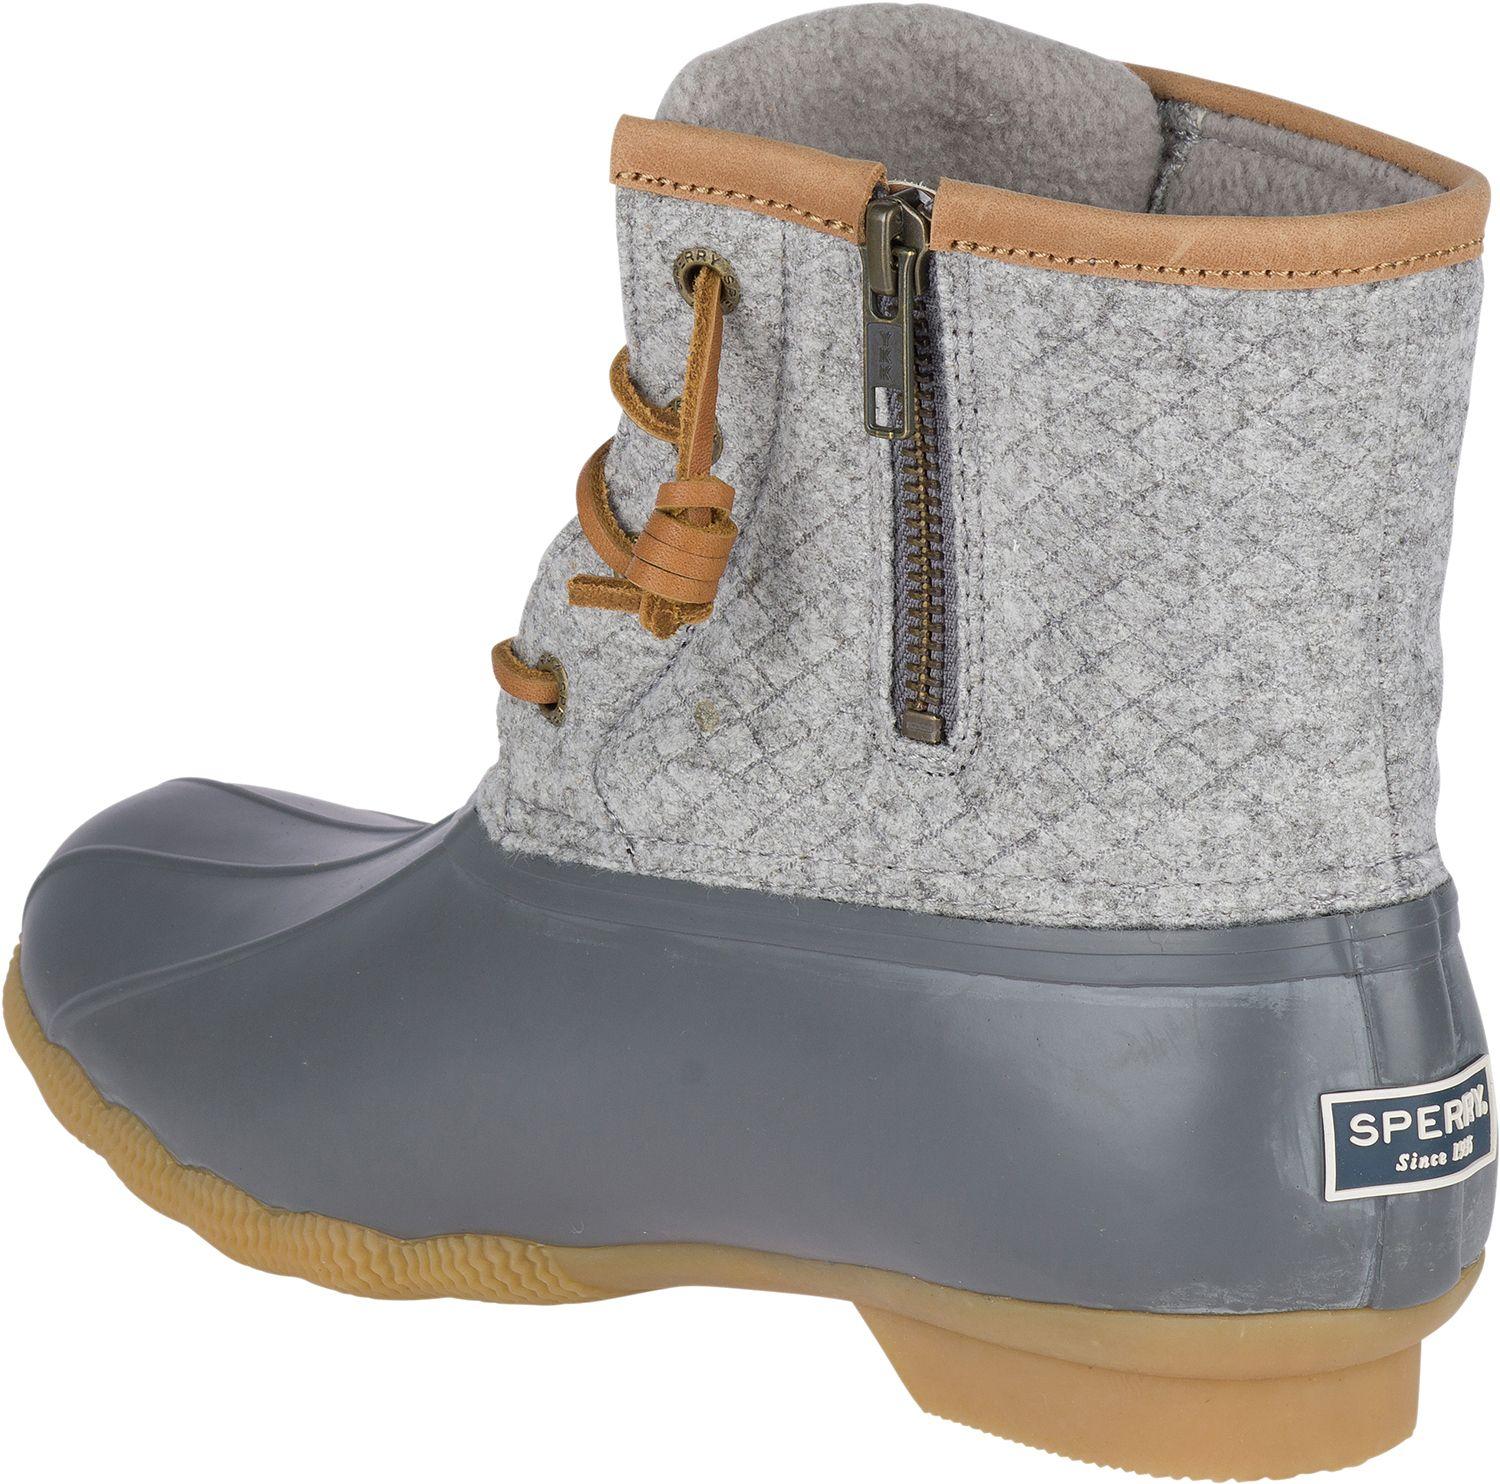 sperry saltwater emboss wool duck rain boots